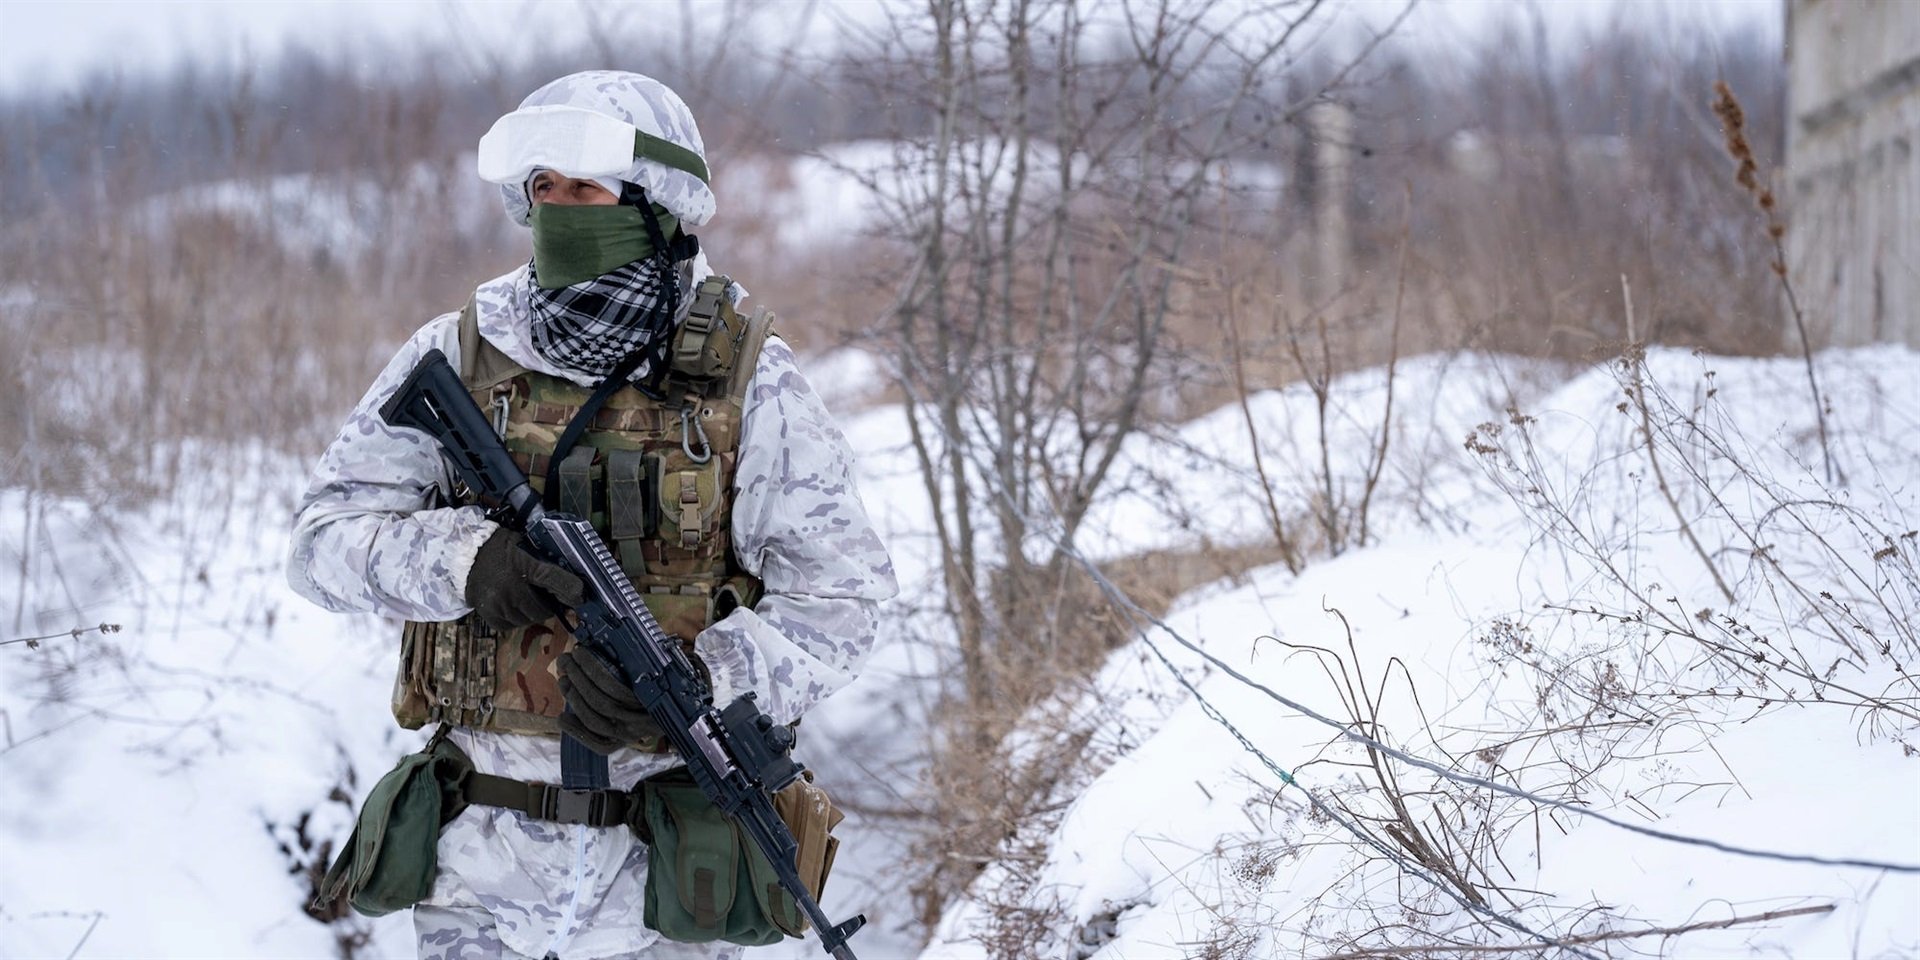 Ukrainian servicemen from the 25th Air Assault Battalion are seen stationed in Avdiivka, Ukraine on January 24, 2022